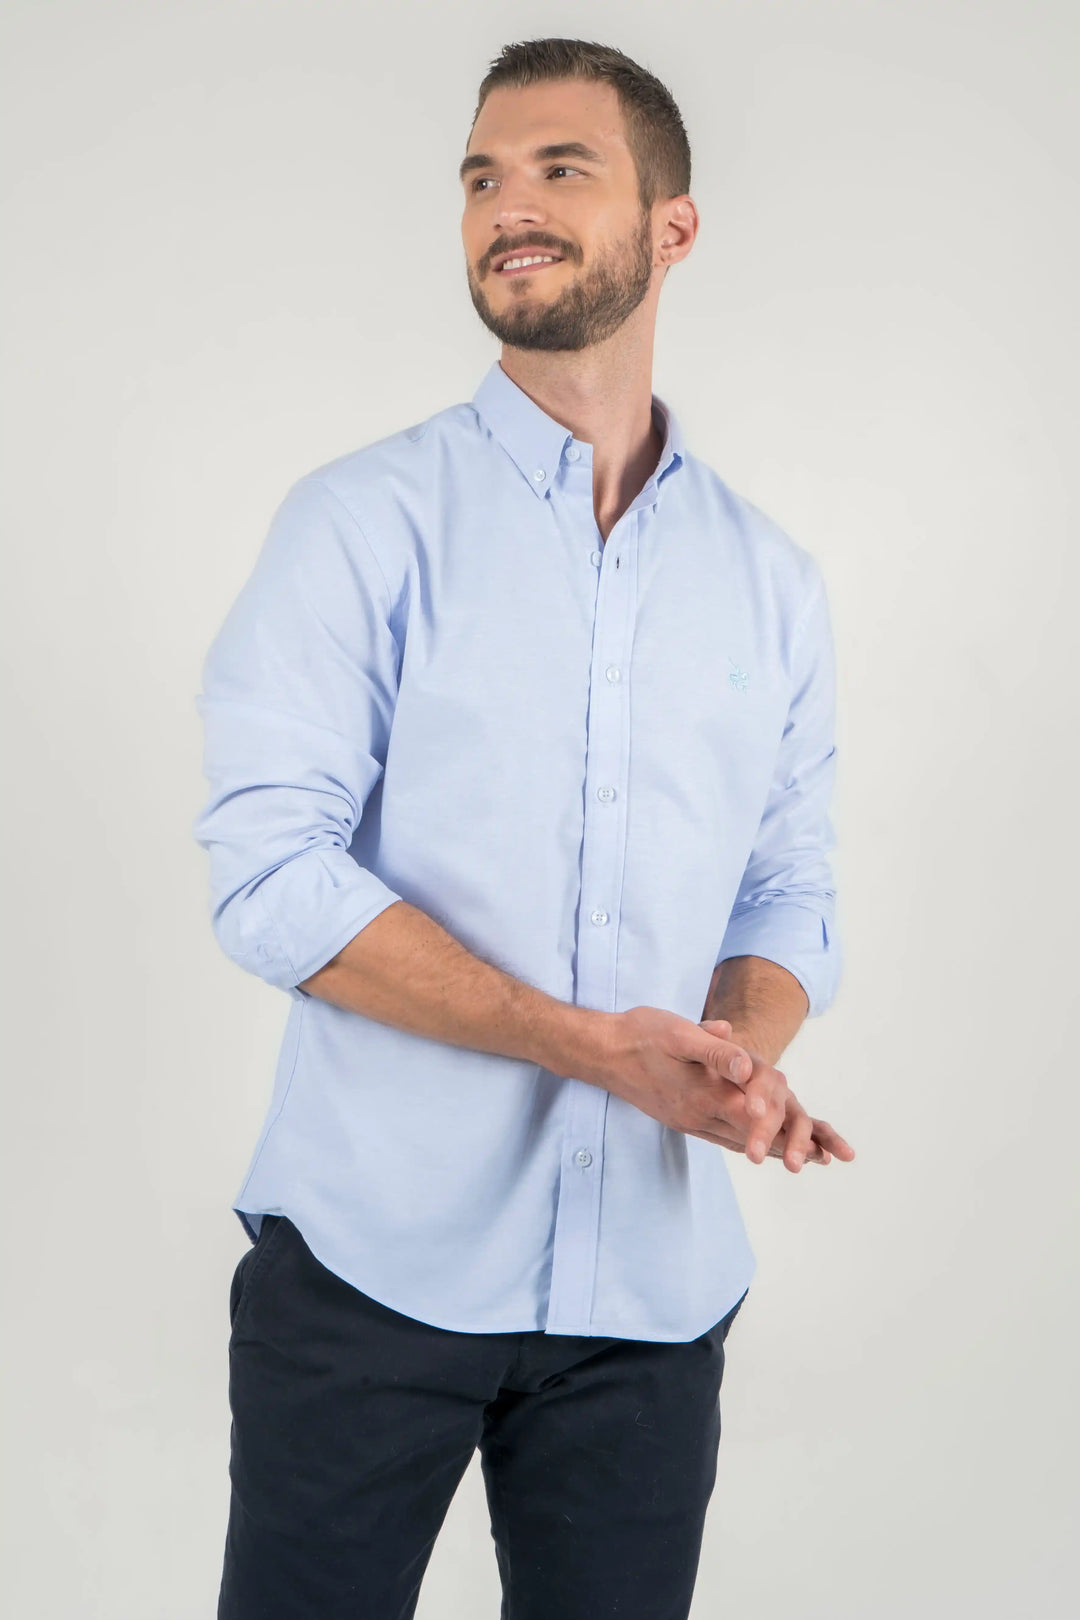 Camisa para hombre manga larga azul claro, tejido muy suave al tacto, ideal para un look casual